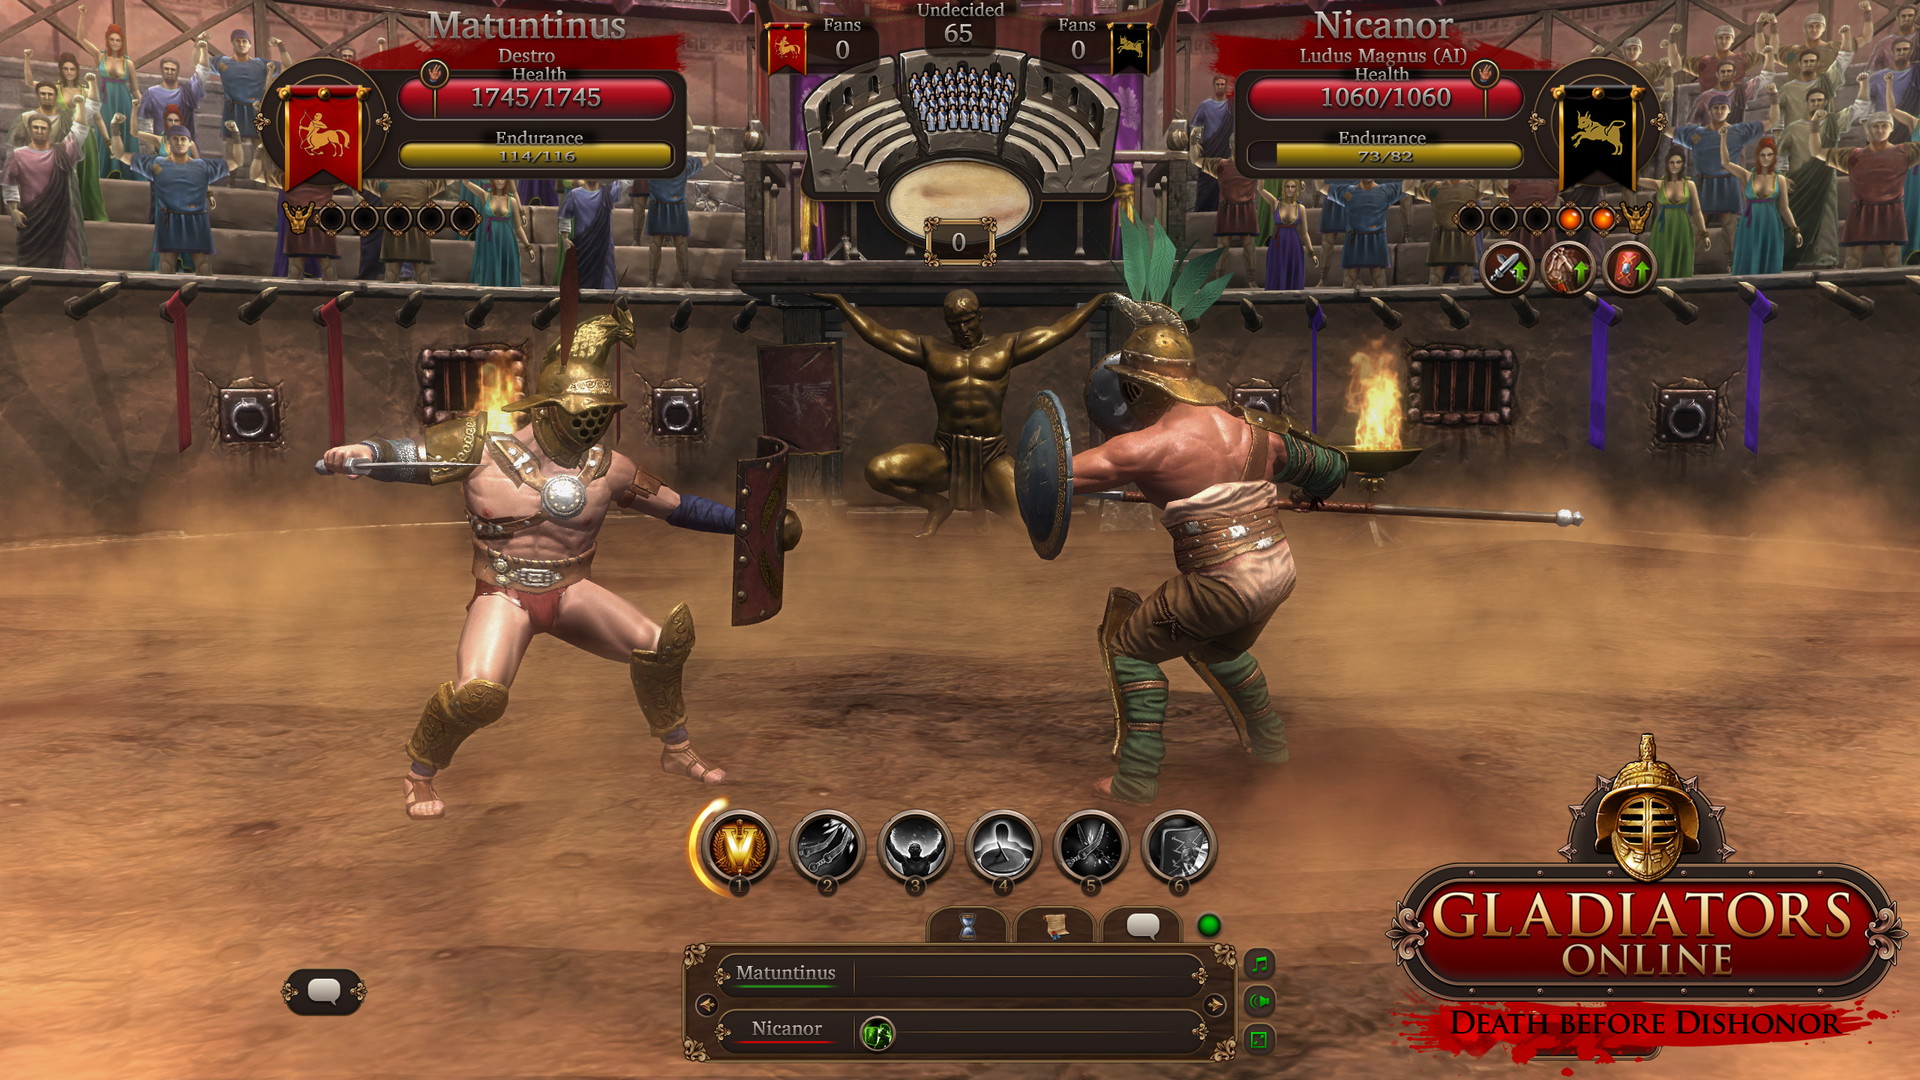 Gladiators Online: Death Before Dishonor - screenshot 13